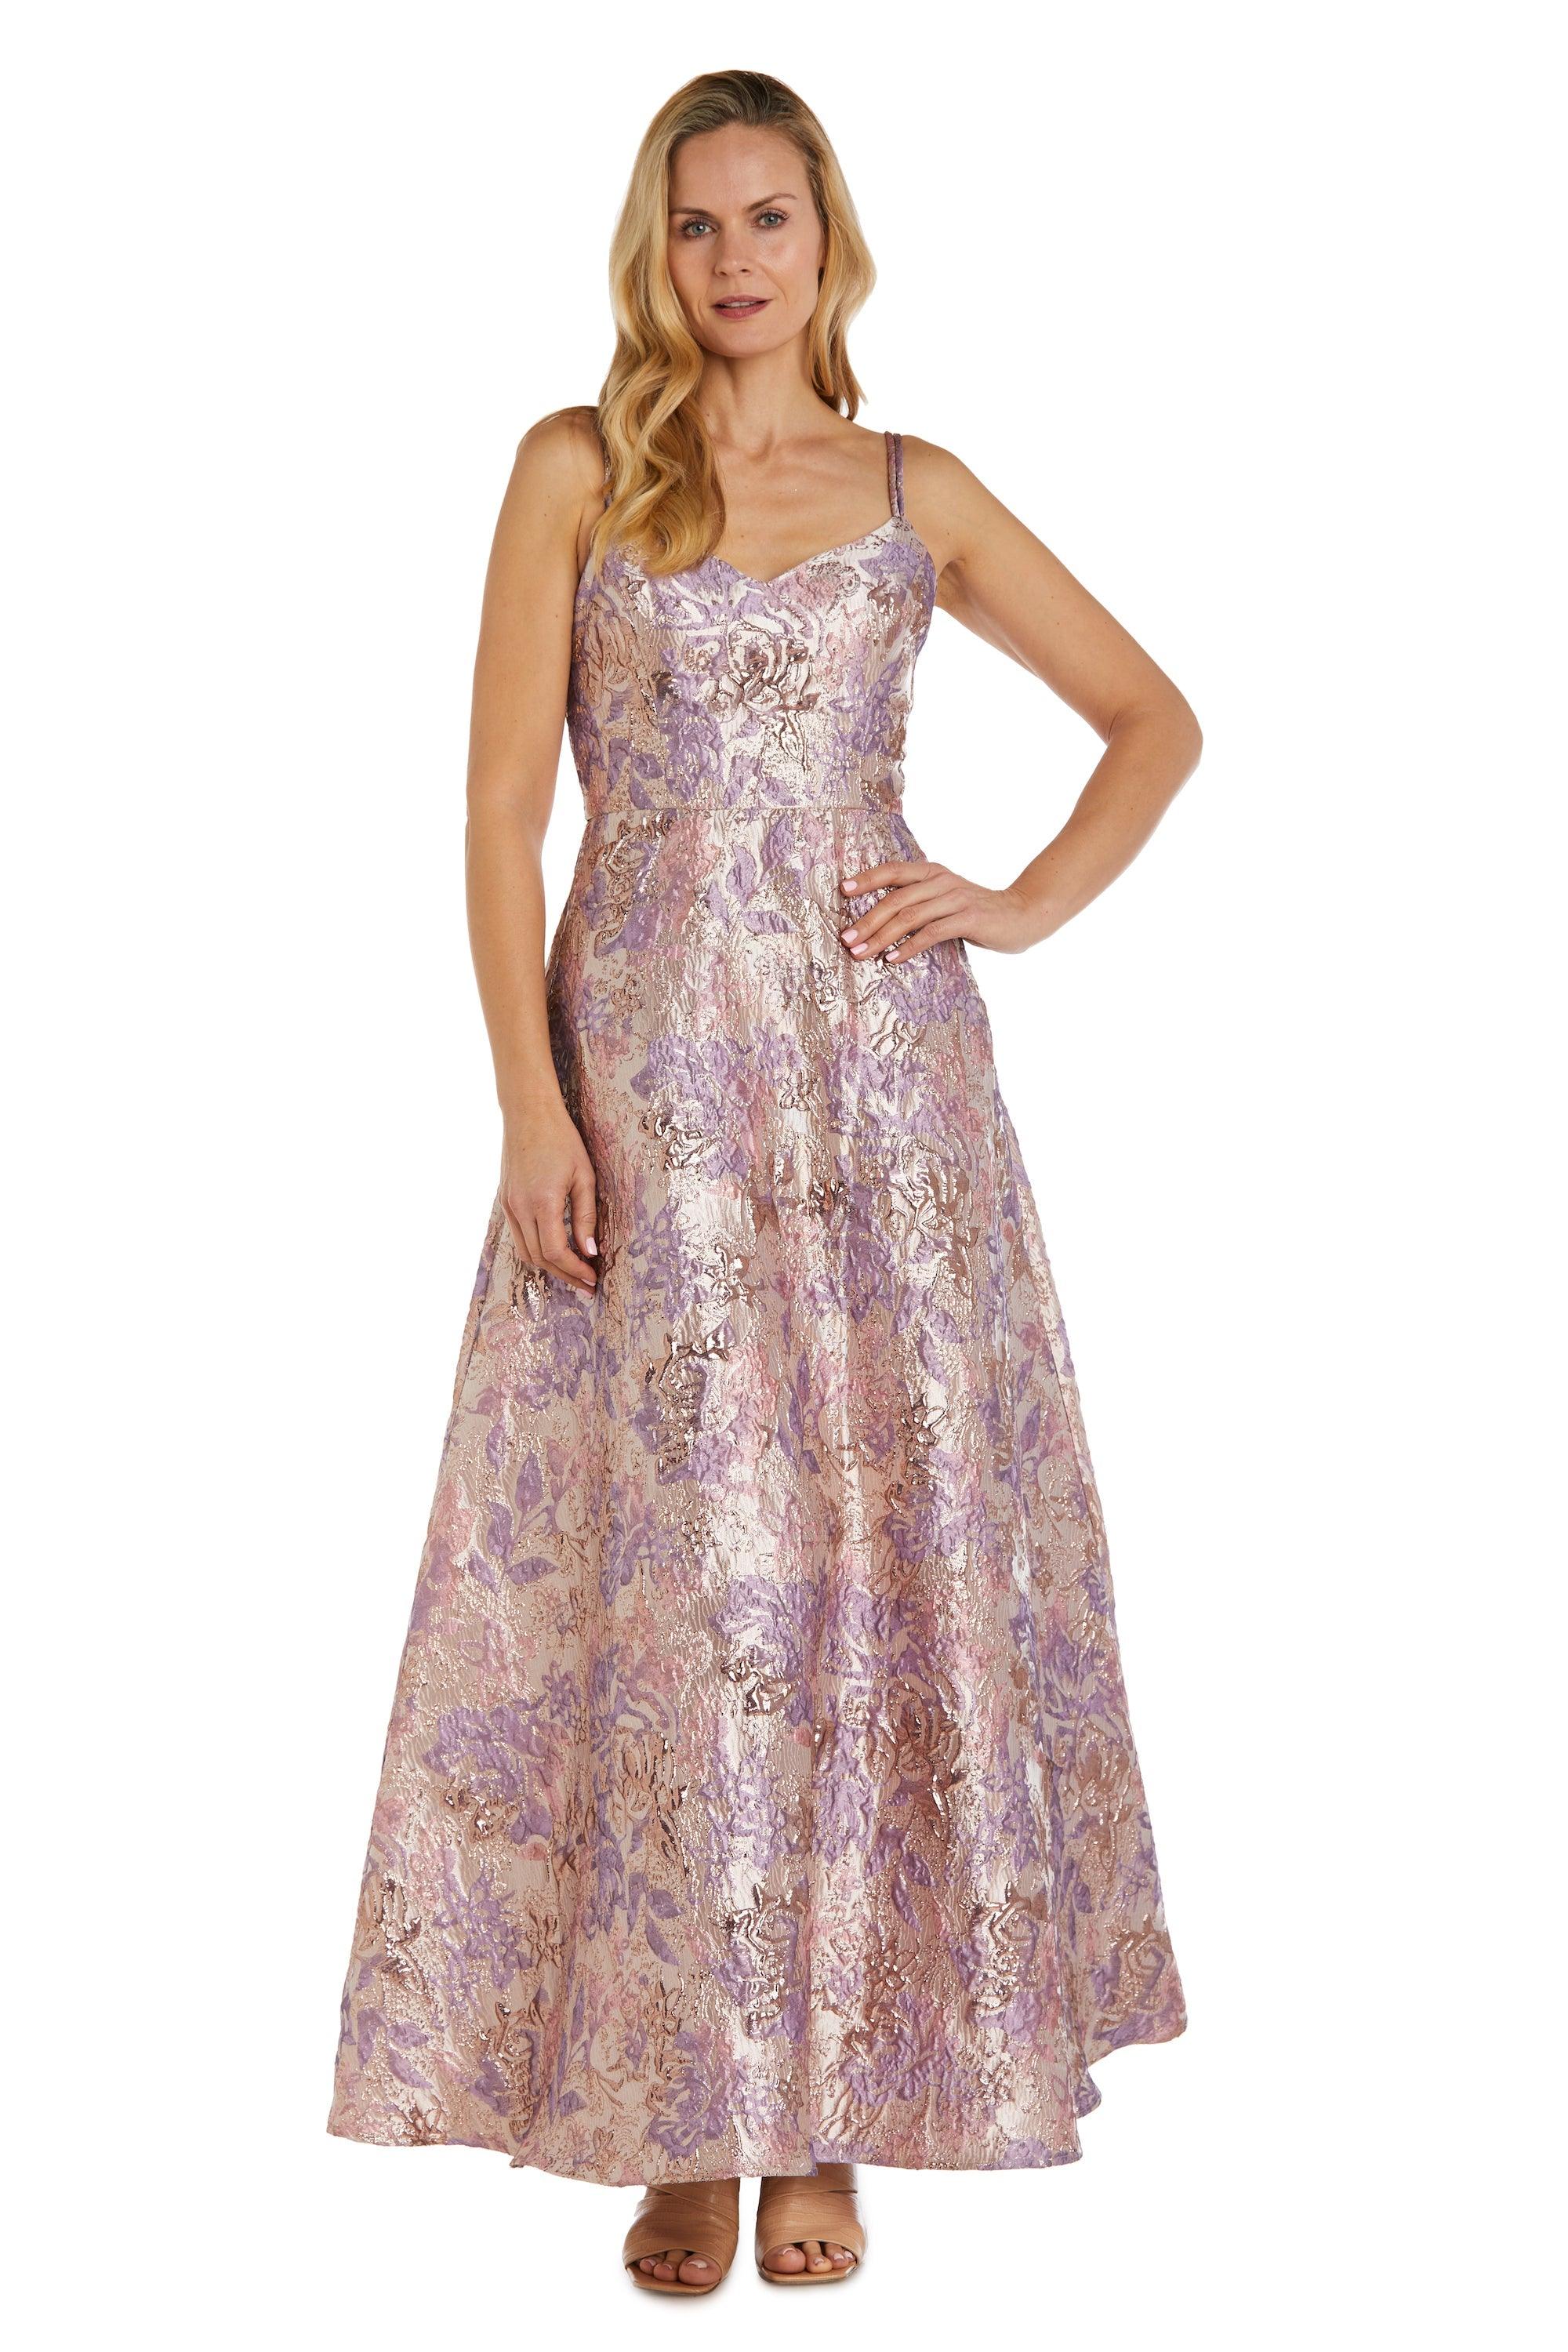 Nightway Long Formal Metallic Dress 22133 - The Dress Outlet